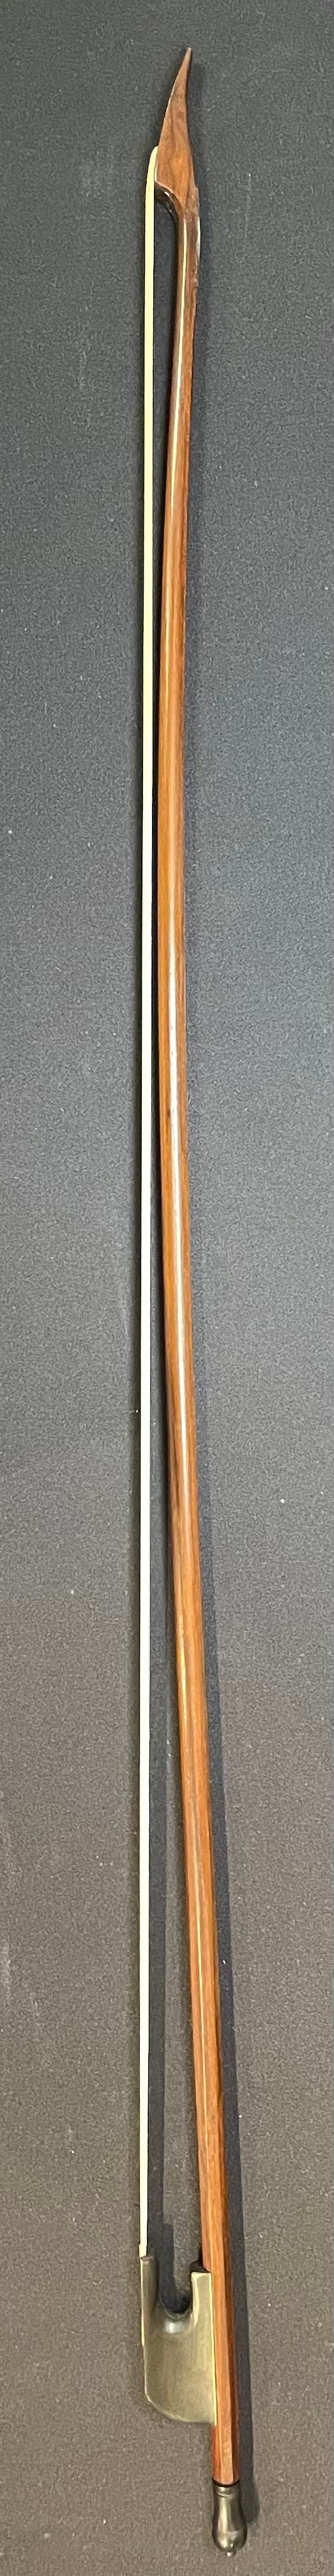 Full Size Viola Bow - Baroque 10VA Model